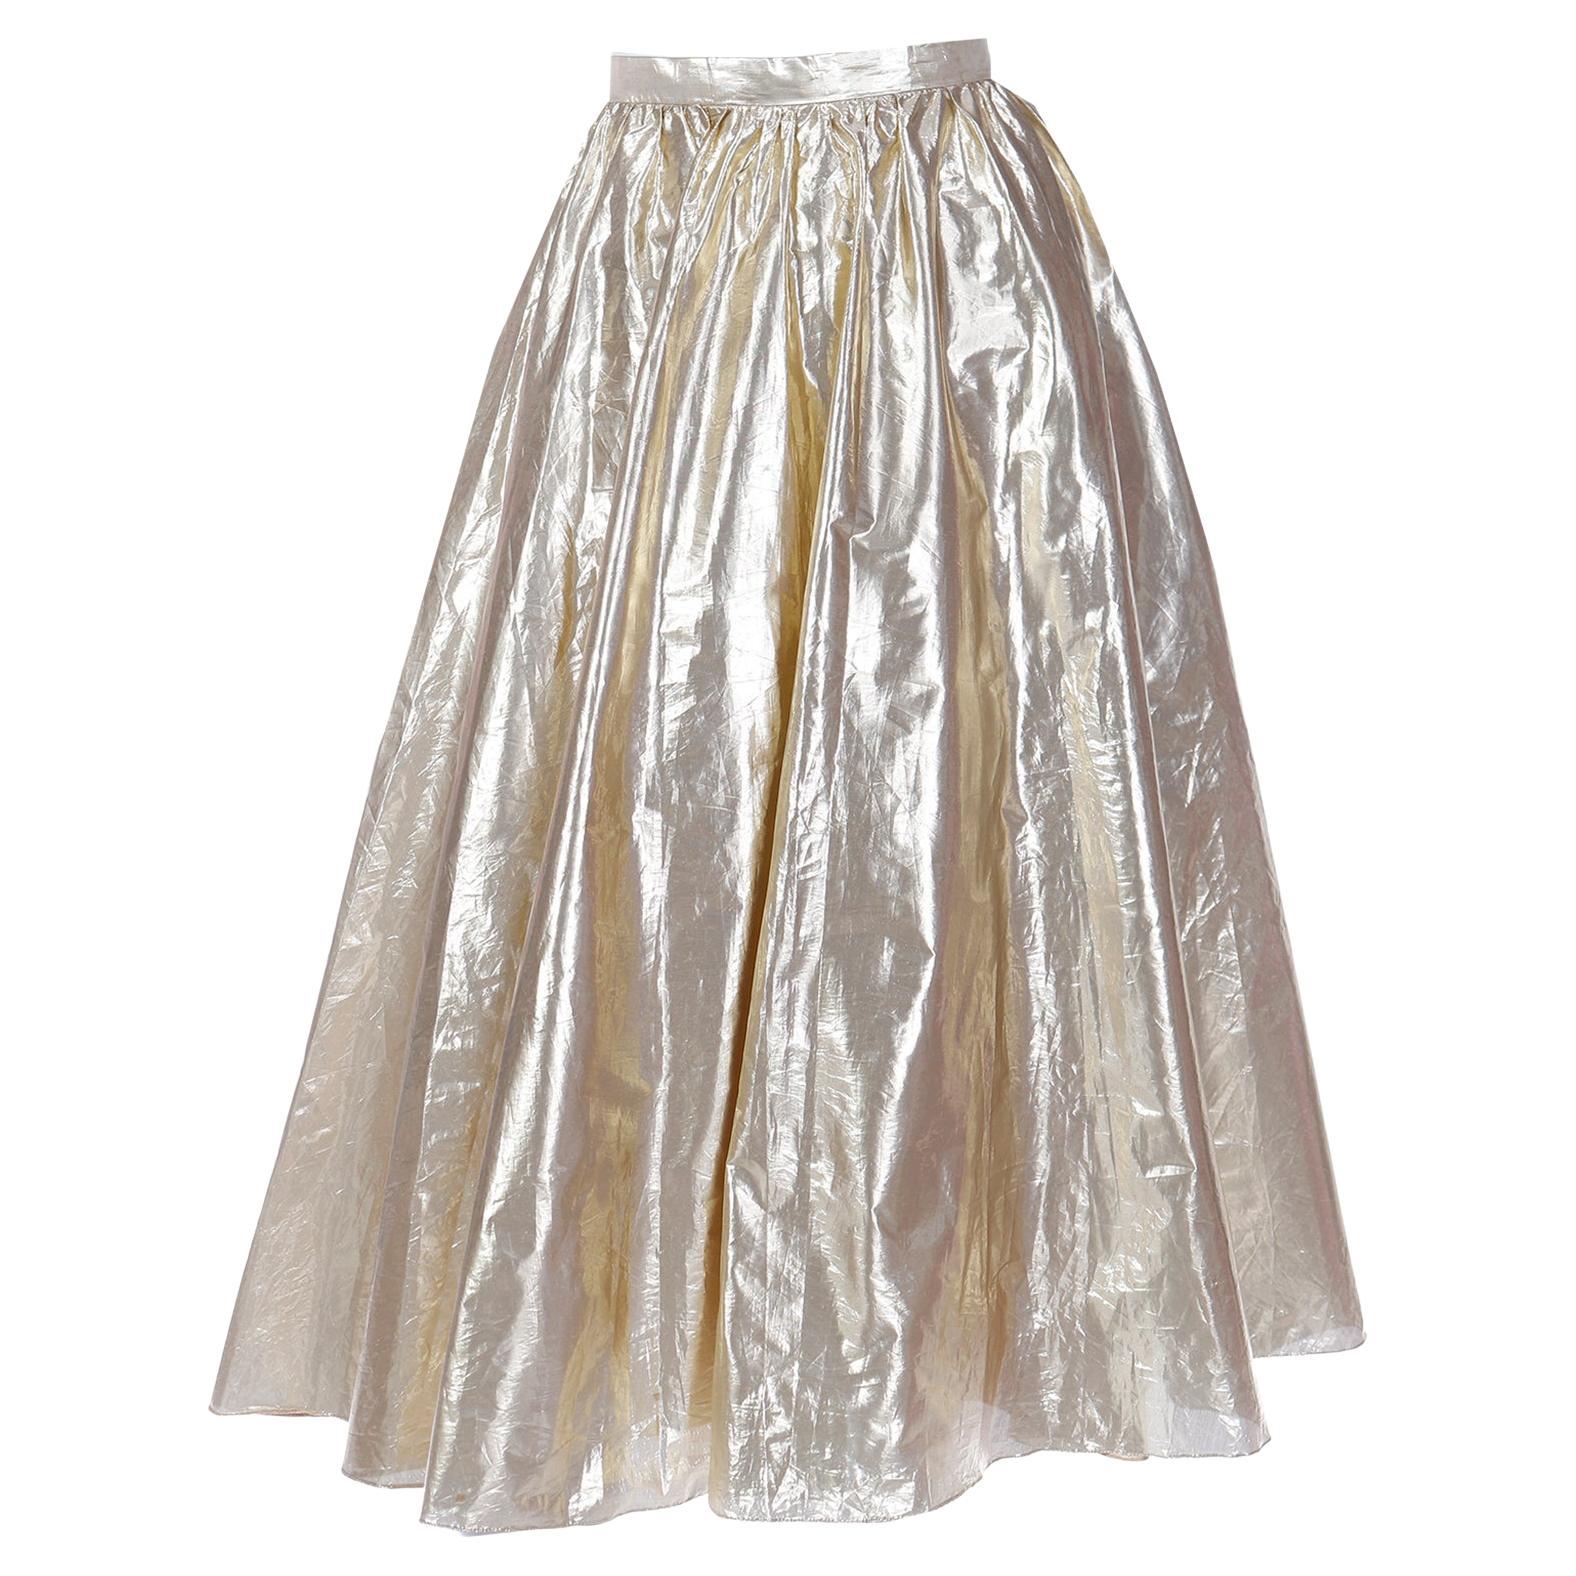 Vintage Gold Tissue Lame Evening Skirt